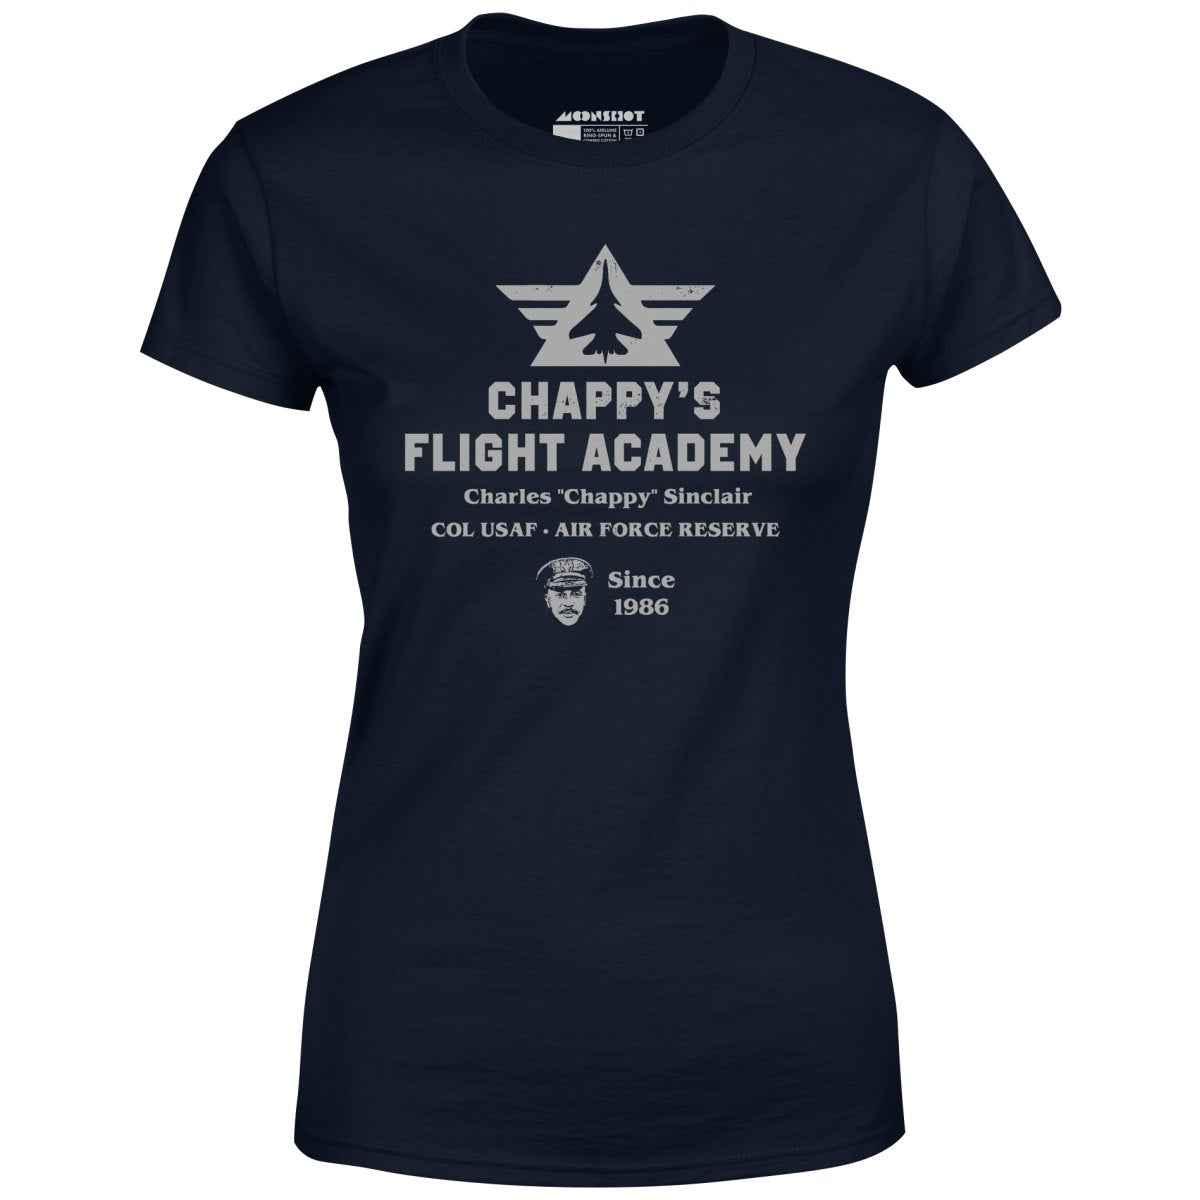 Chappy's Flight Academy - Iron Eagle - Women's T-Shirt